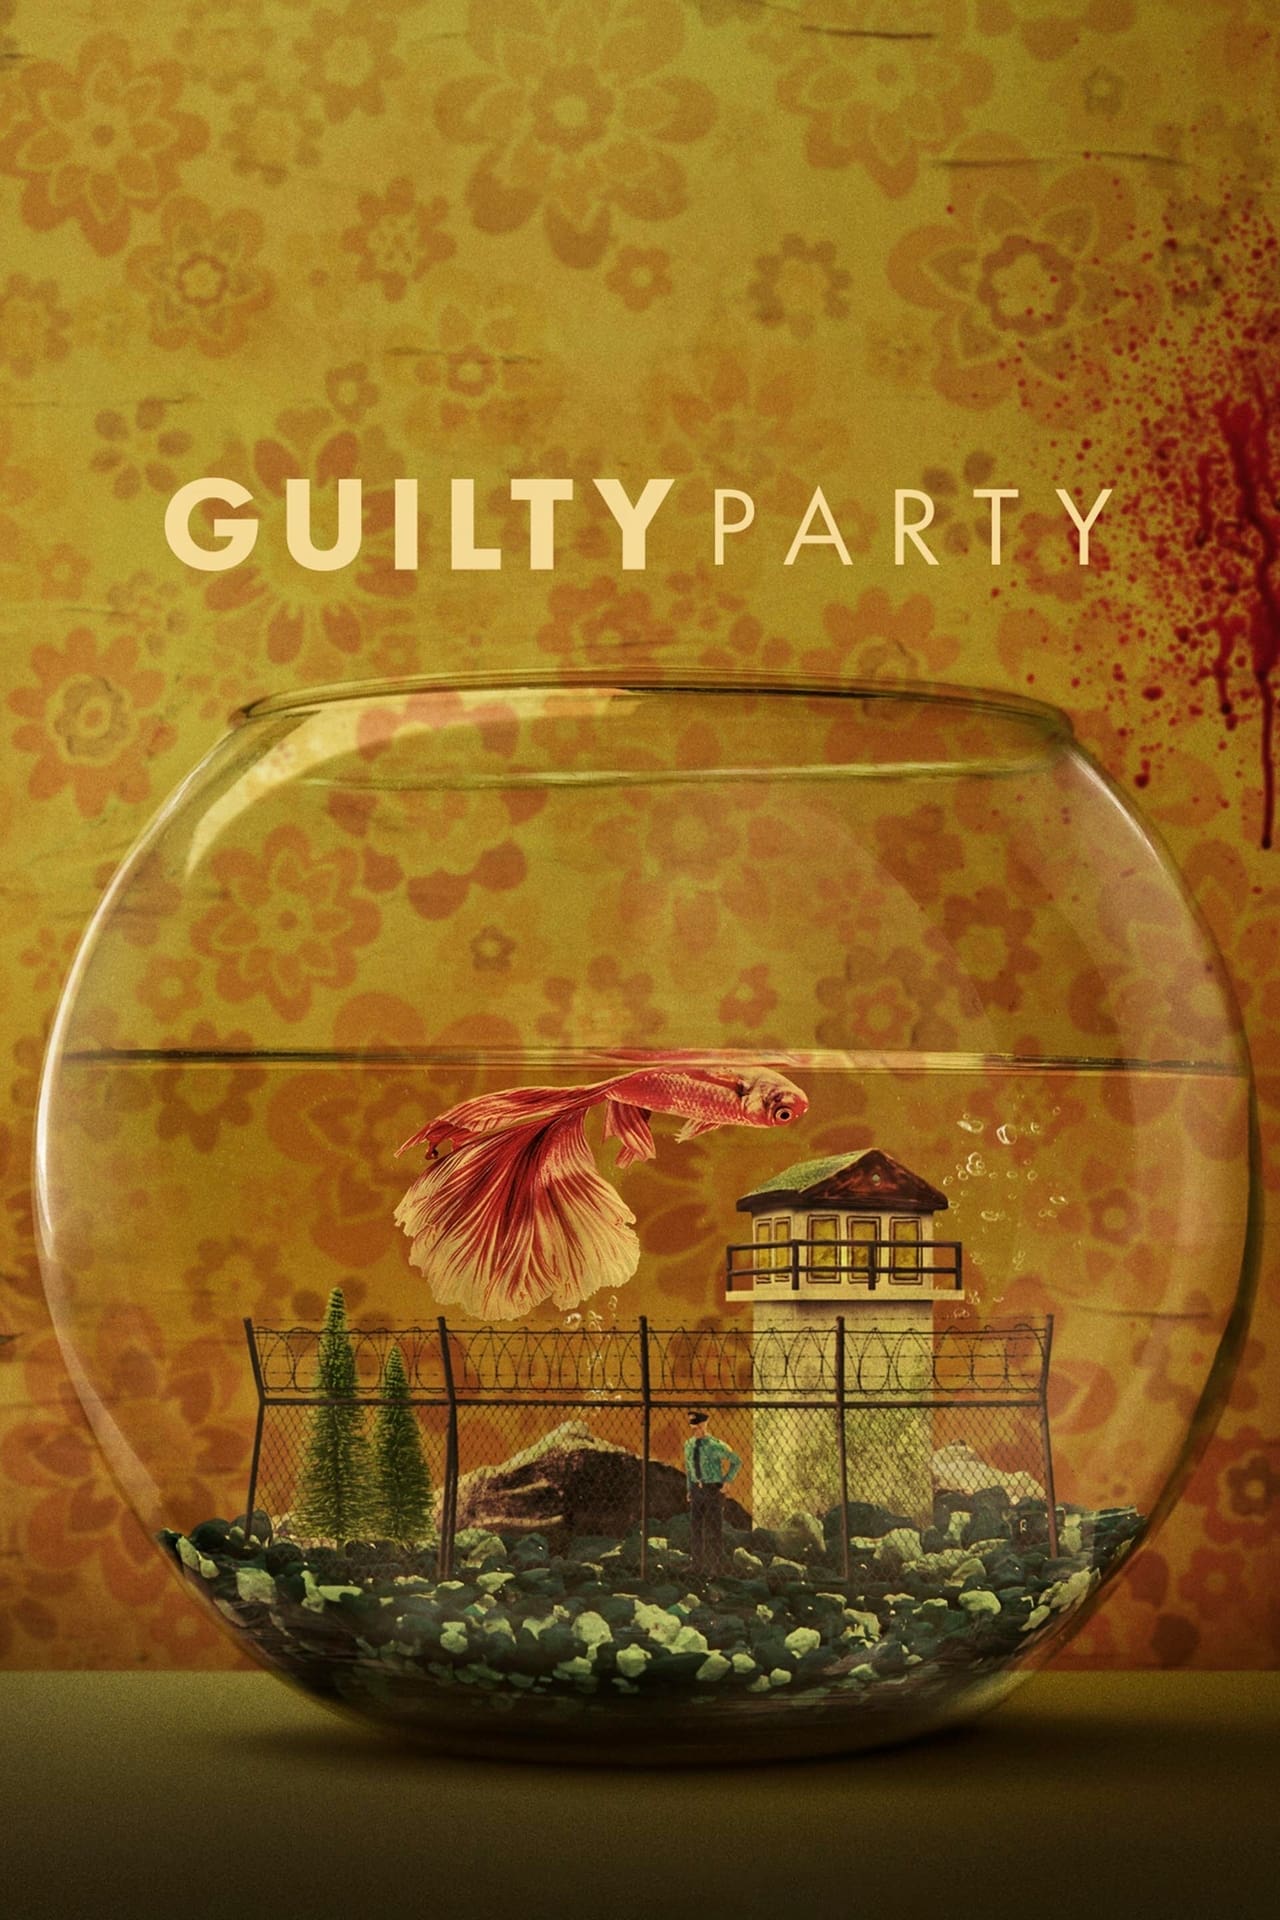 Guilty Party (season 1)